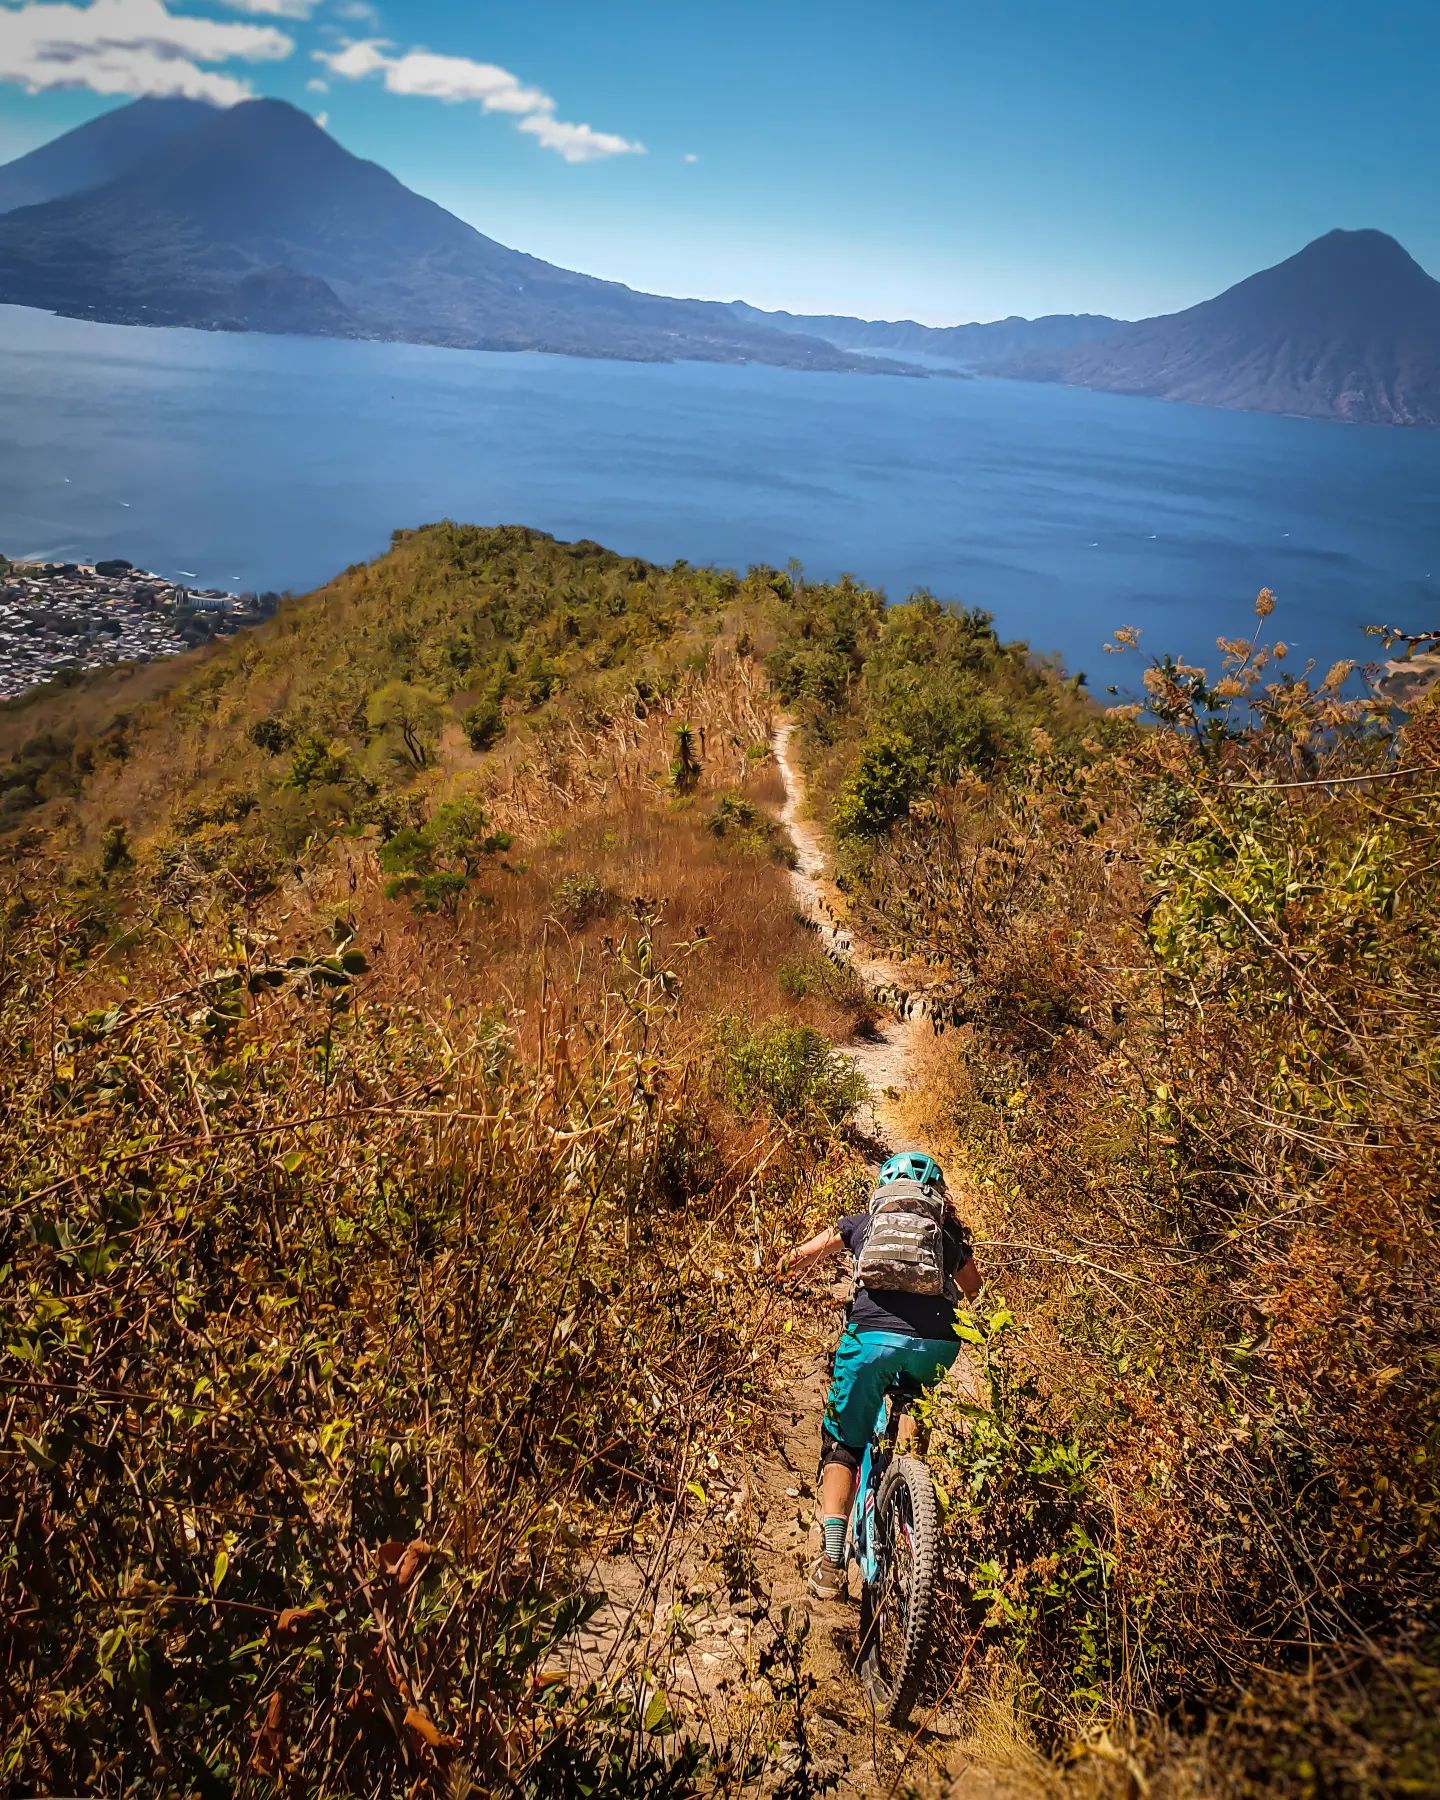 Atitlán Trails 🏞️ 
Próxima salida Sábado 29 Ene
.
 Conectaremos una ruta desde nuestro centro en Tecpán hacia el Lago. Todo día todo incluído (ida y vuelta) Guías, comidas, transporte, vistas 😉.

.
.
.
#mtbtours #mtbtravel #guatemala🇬🇹 #getout #enduromtb #gorideyourbike #guate #mtblife #lakeatitlan #lagodeatitlan #explore #downhillmtb #biketravel #bikelife #bikeviews #mtbguatemala #biketours #travelmore #adventure #adventuremtb #mtbtheworld